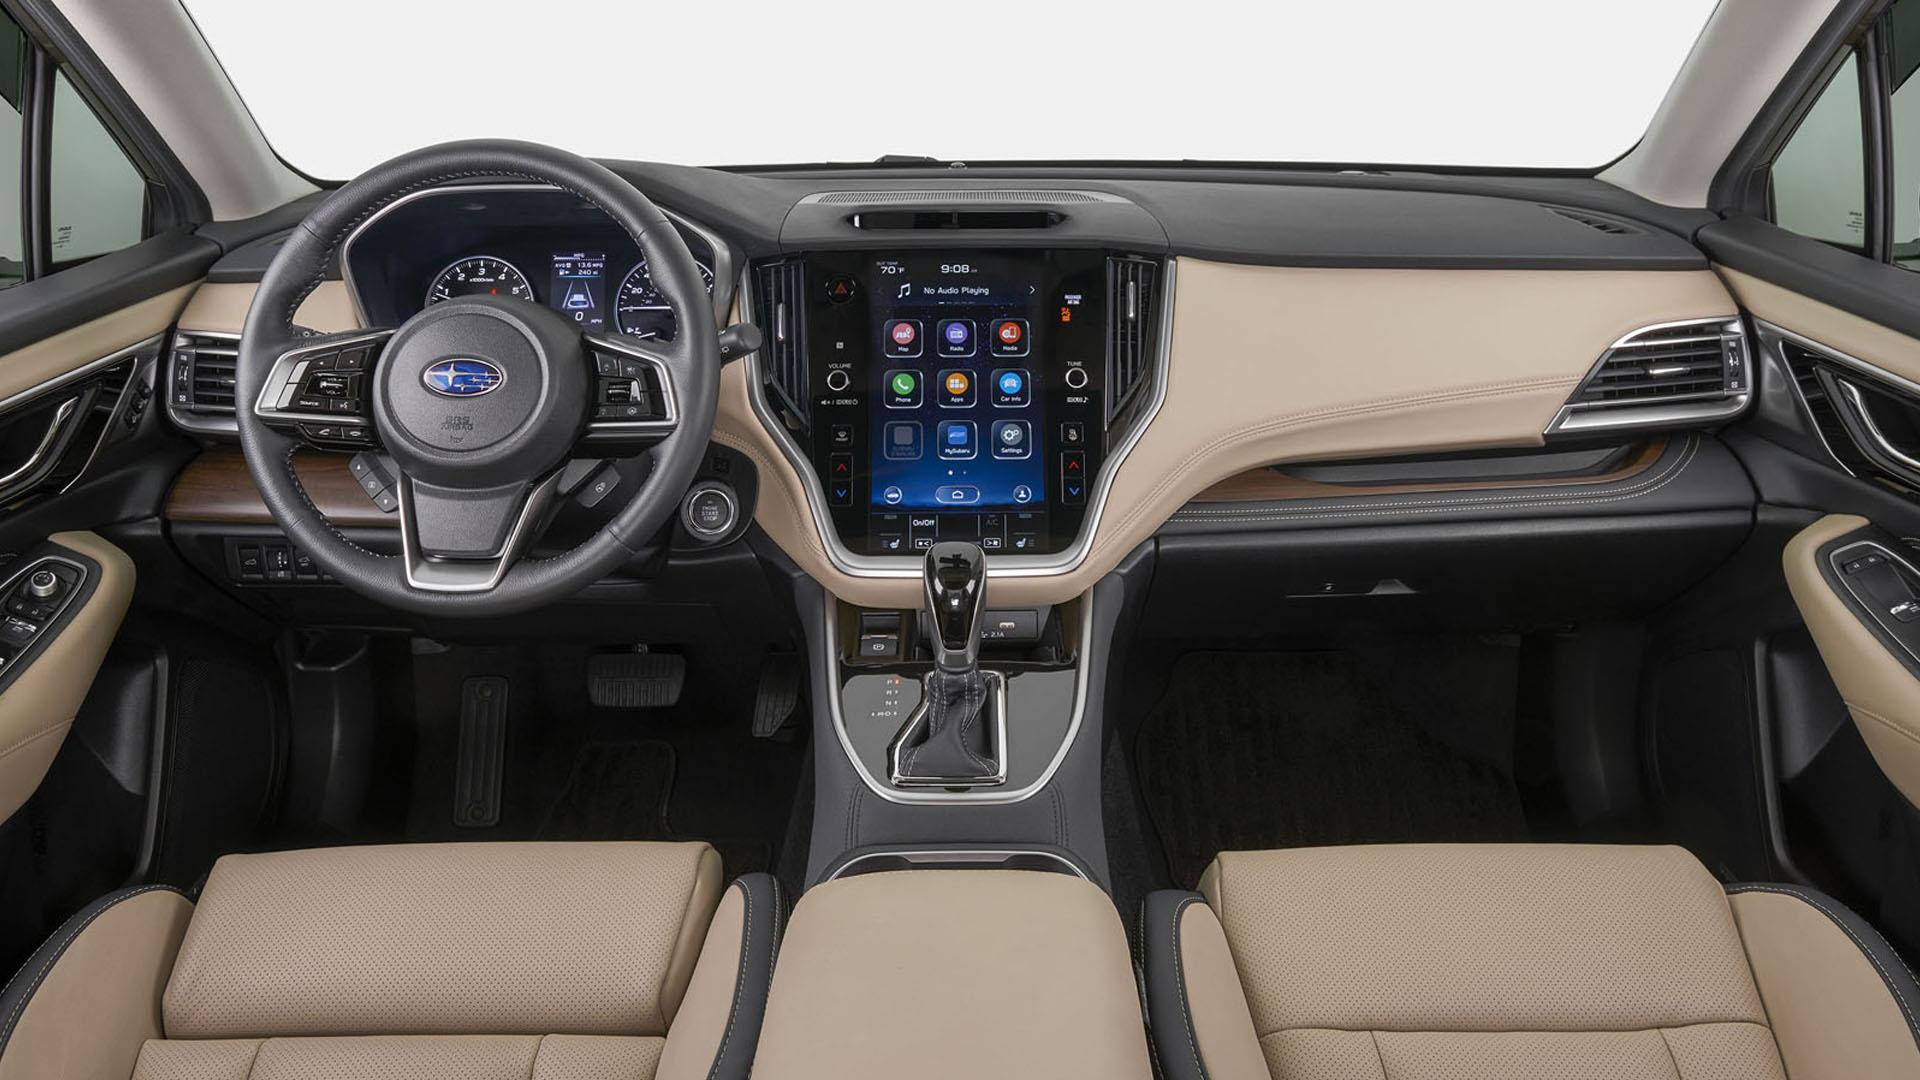 2021 Subaru Legacy Premium Sedan Interior Trim Kit Woodgrain. Upgrade